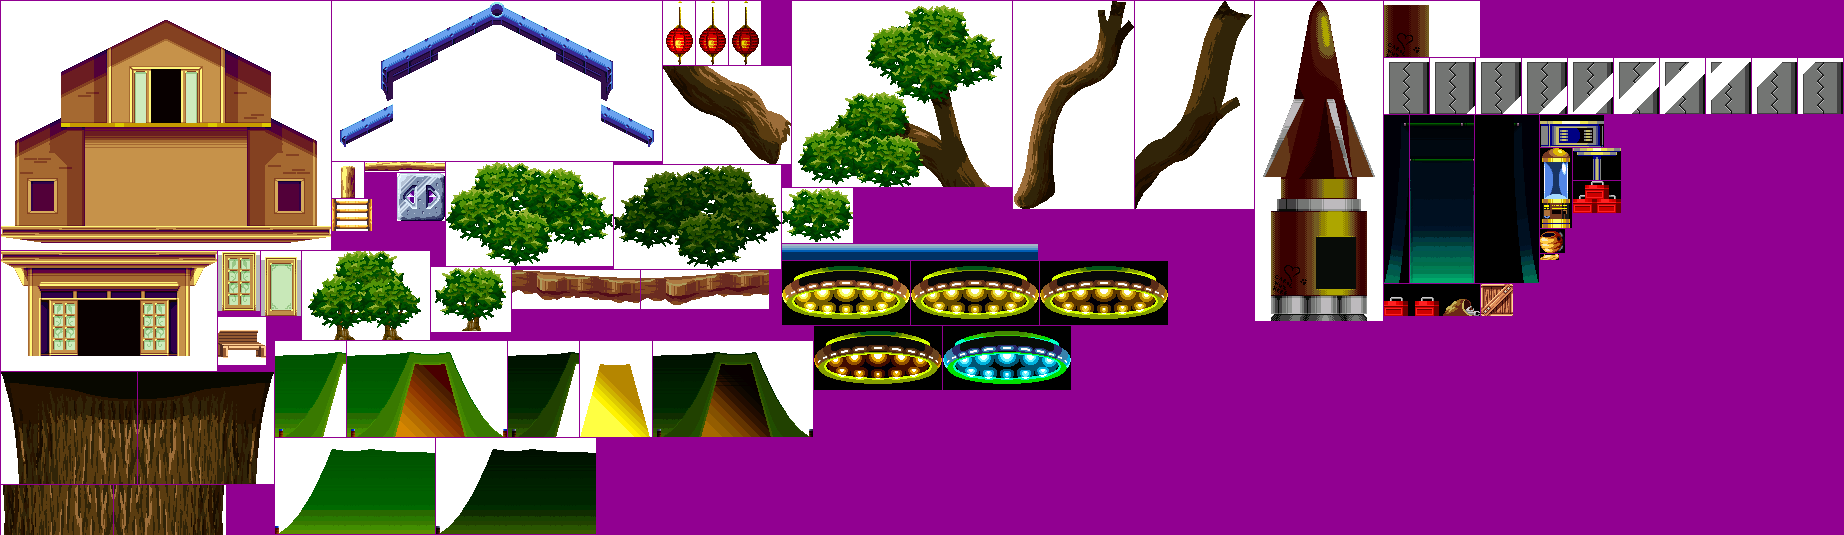 Freedom Planet - Lilac Treehouse Cutscene Objects